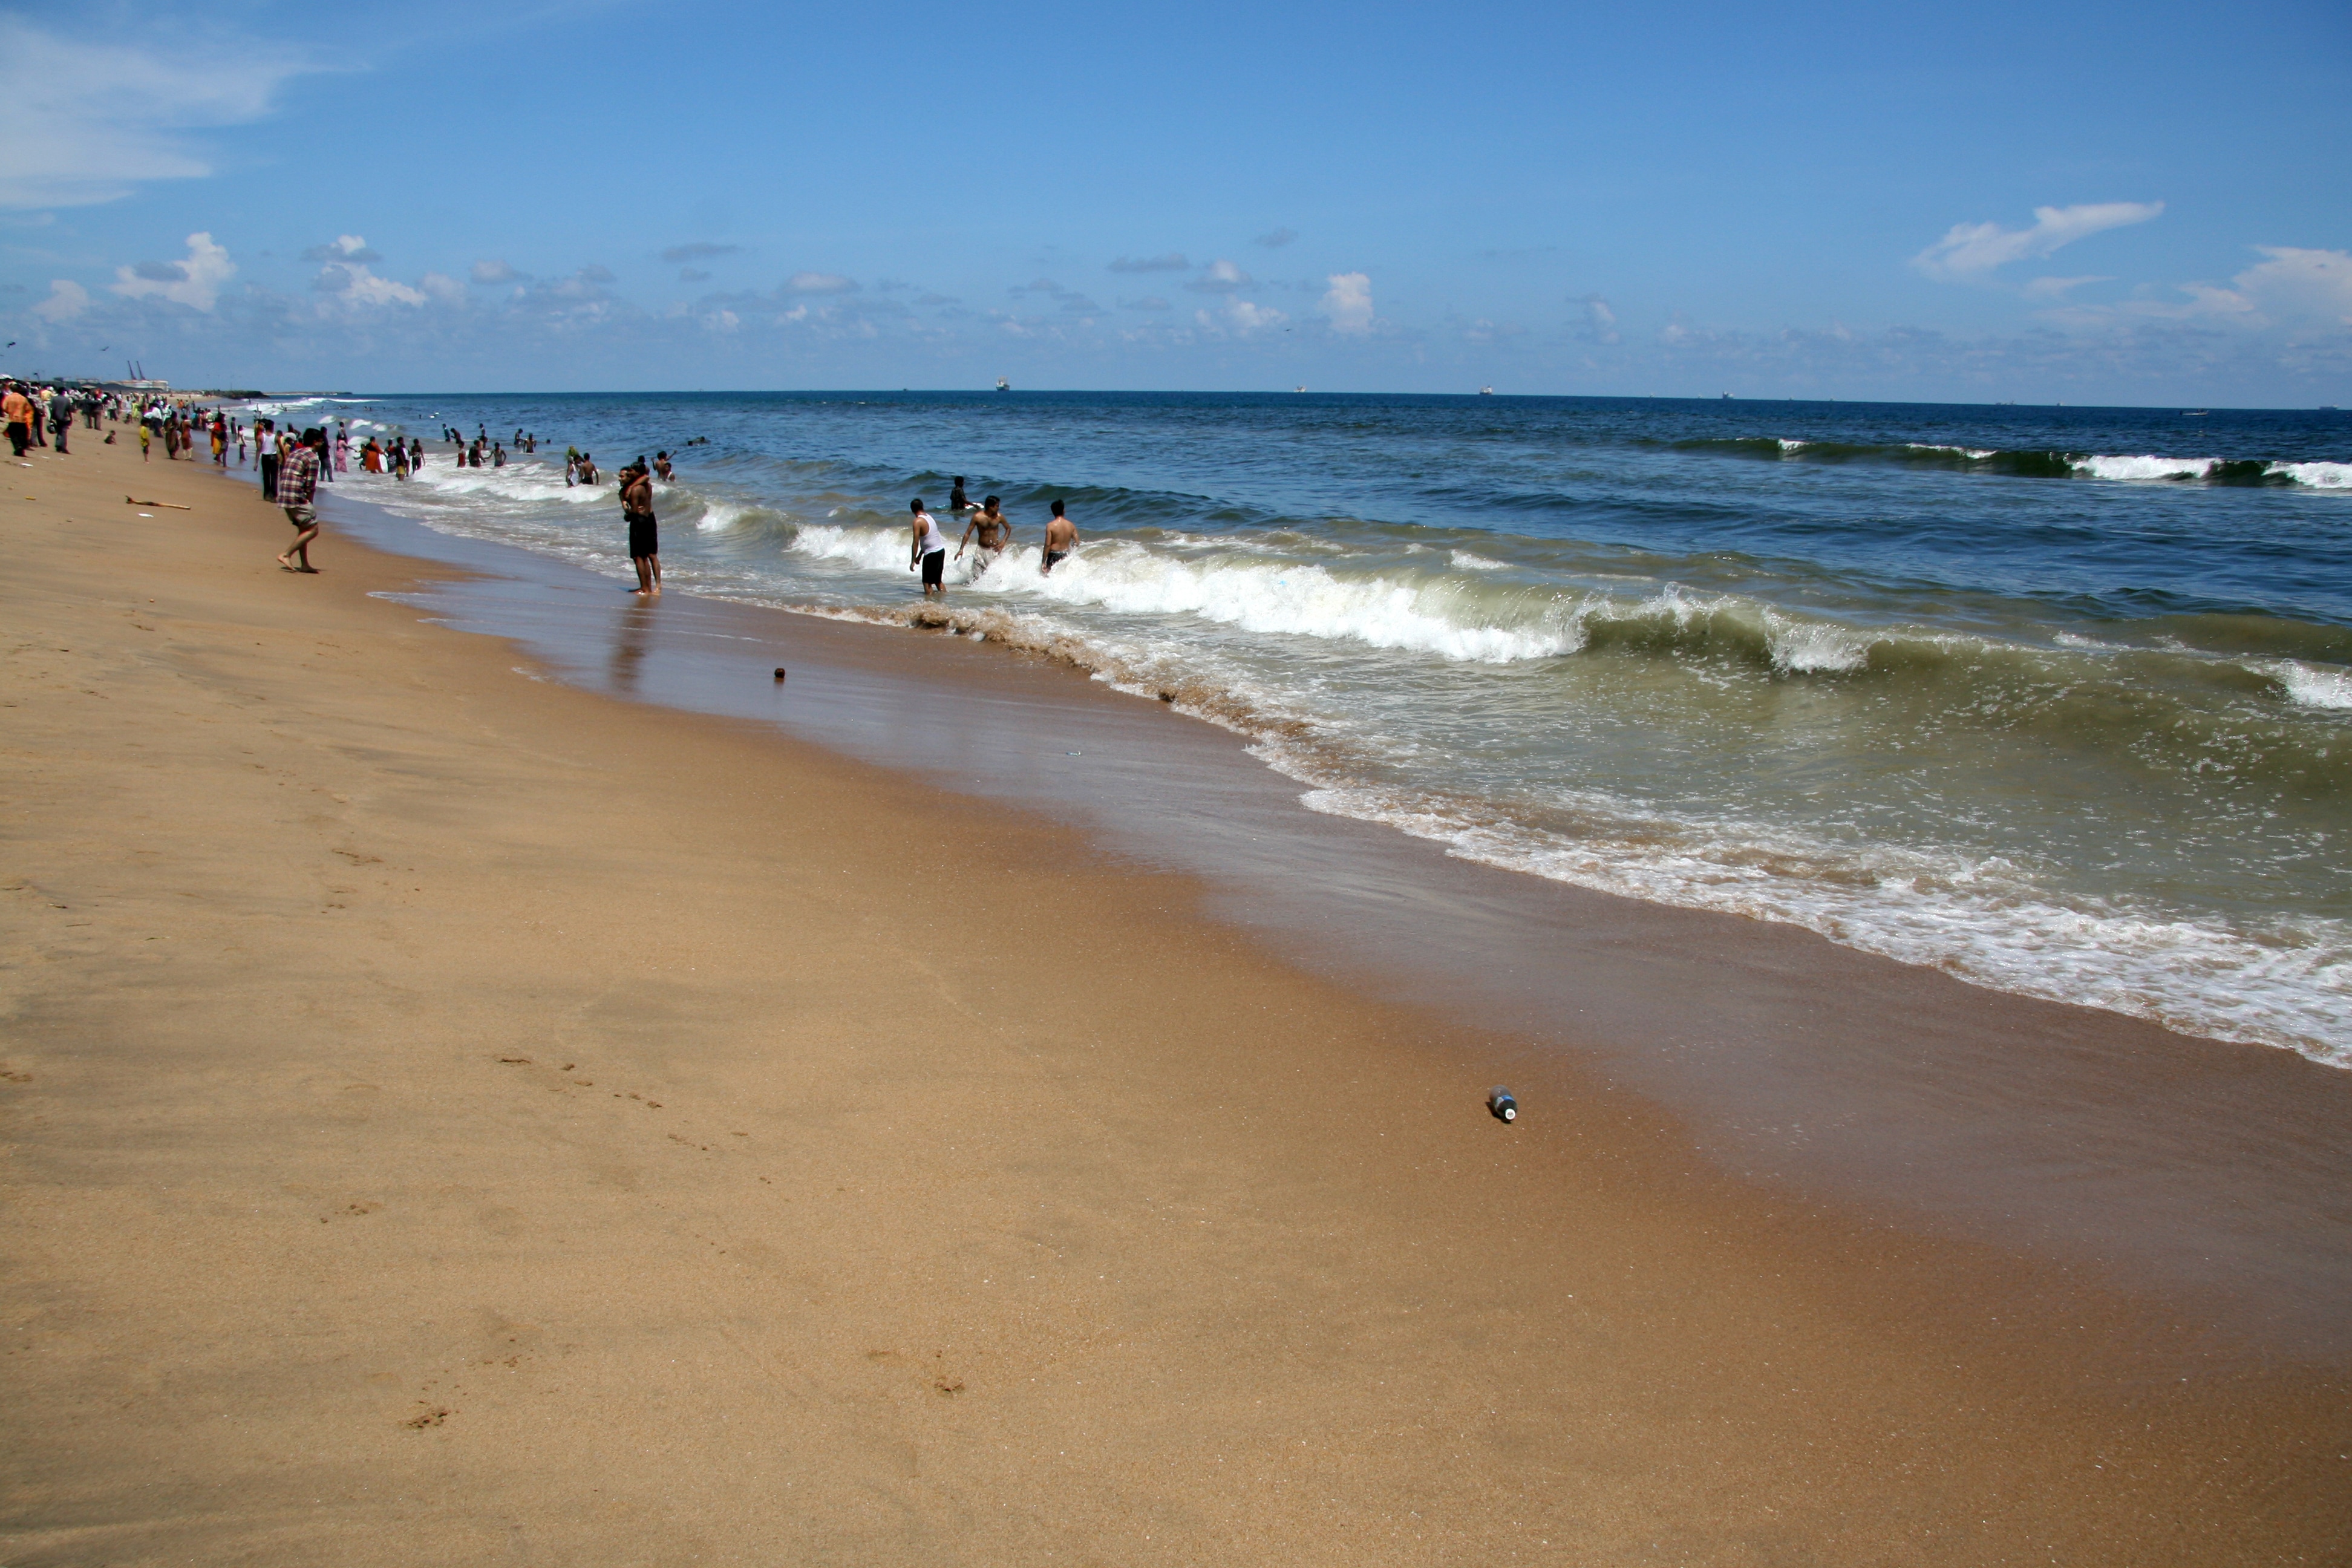 places to visit in chennai near marina beach